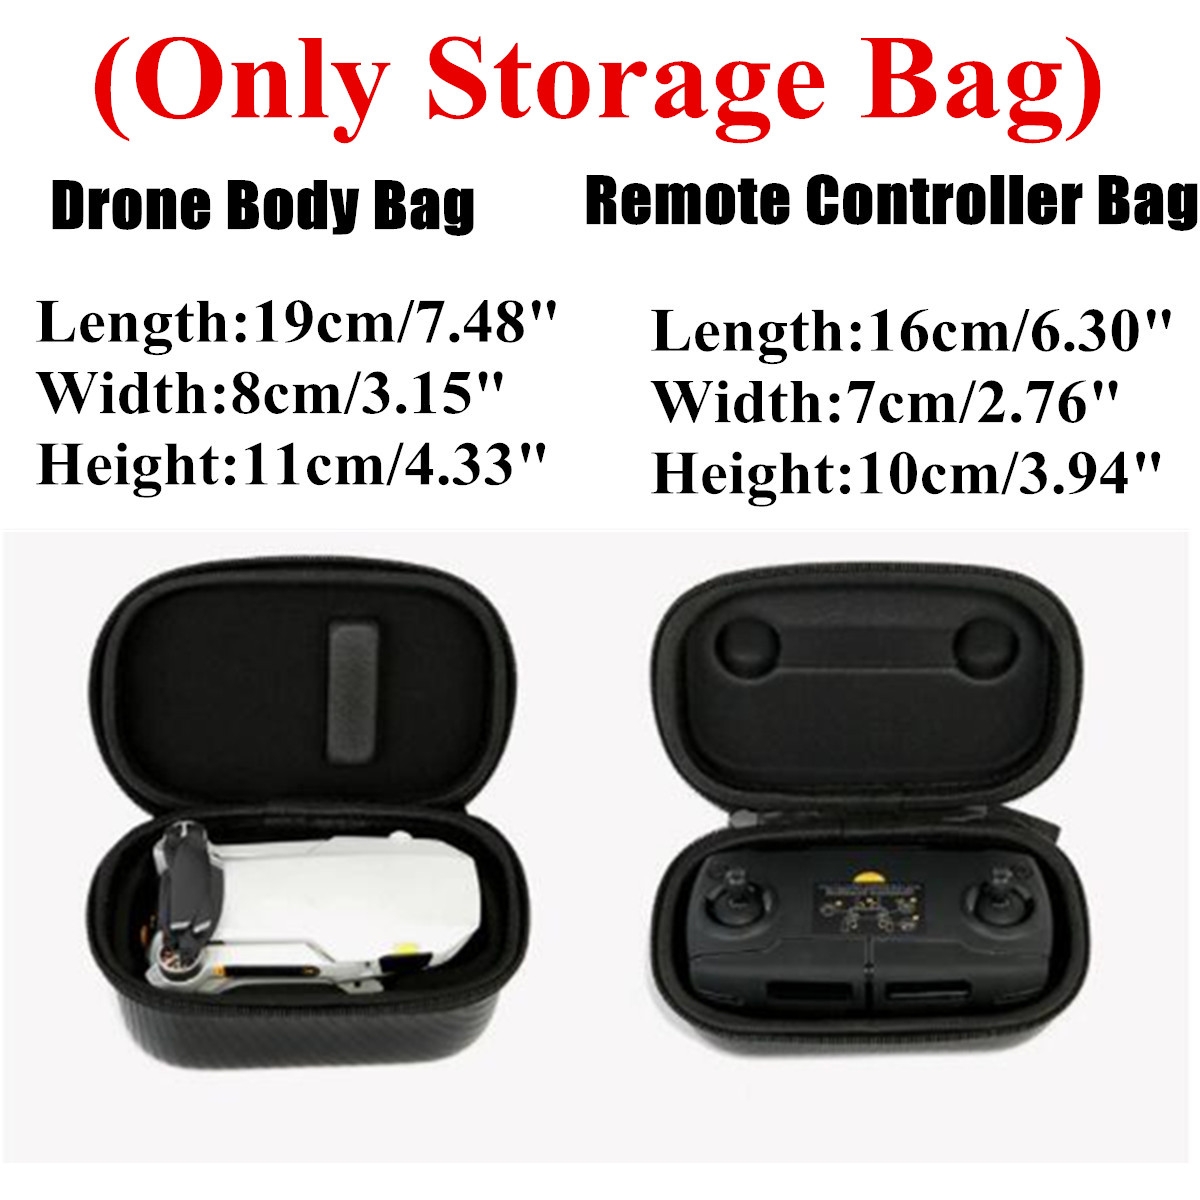 Carrying Case Storage Box Bag For DJI Mavic Mini Drone Remote Controller